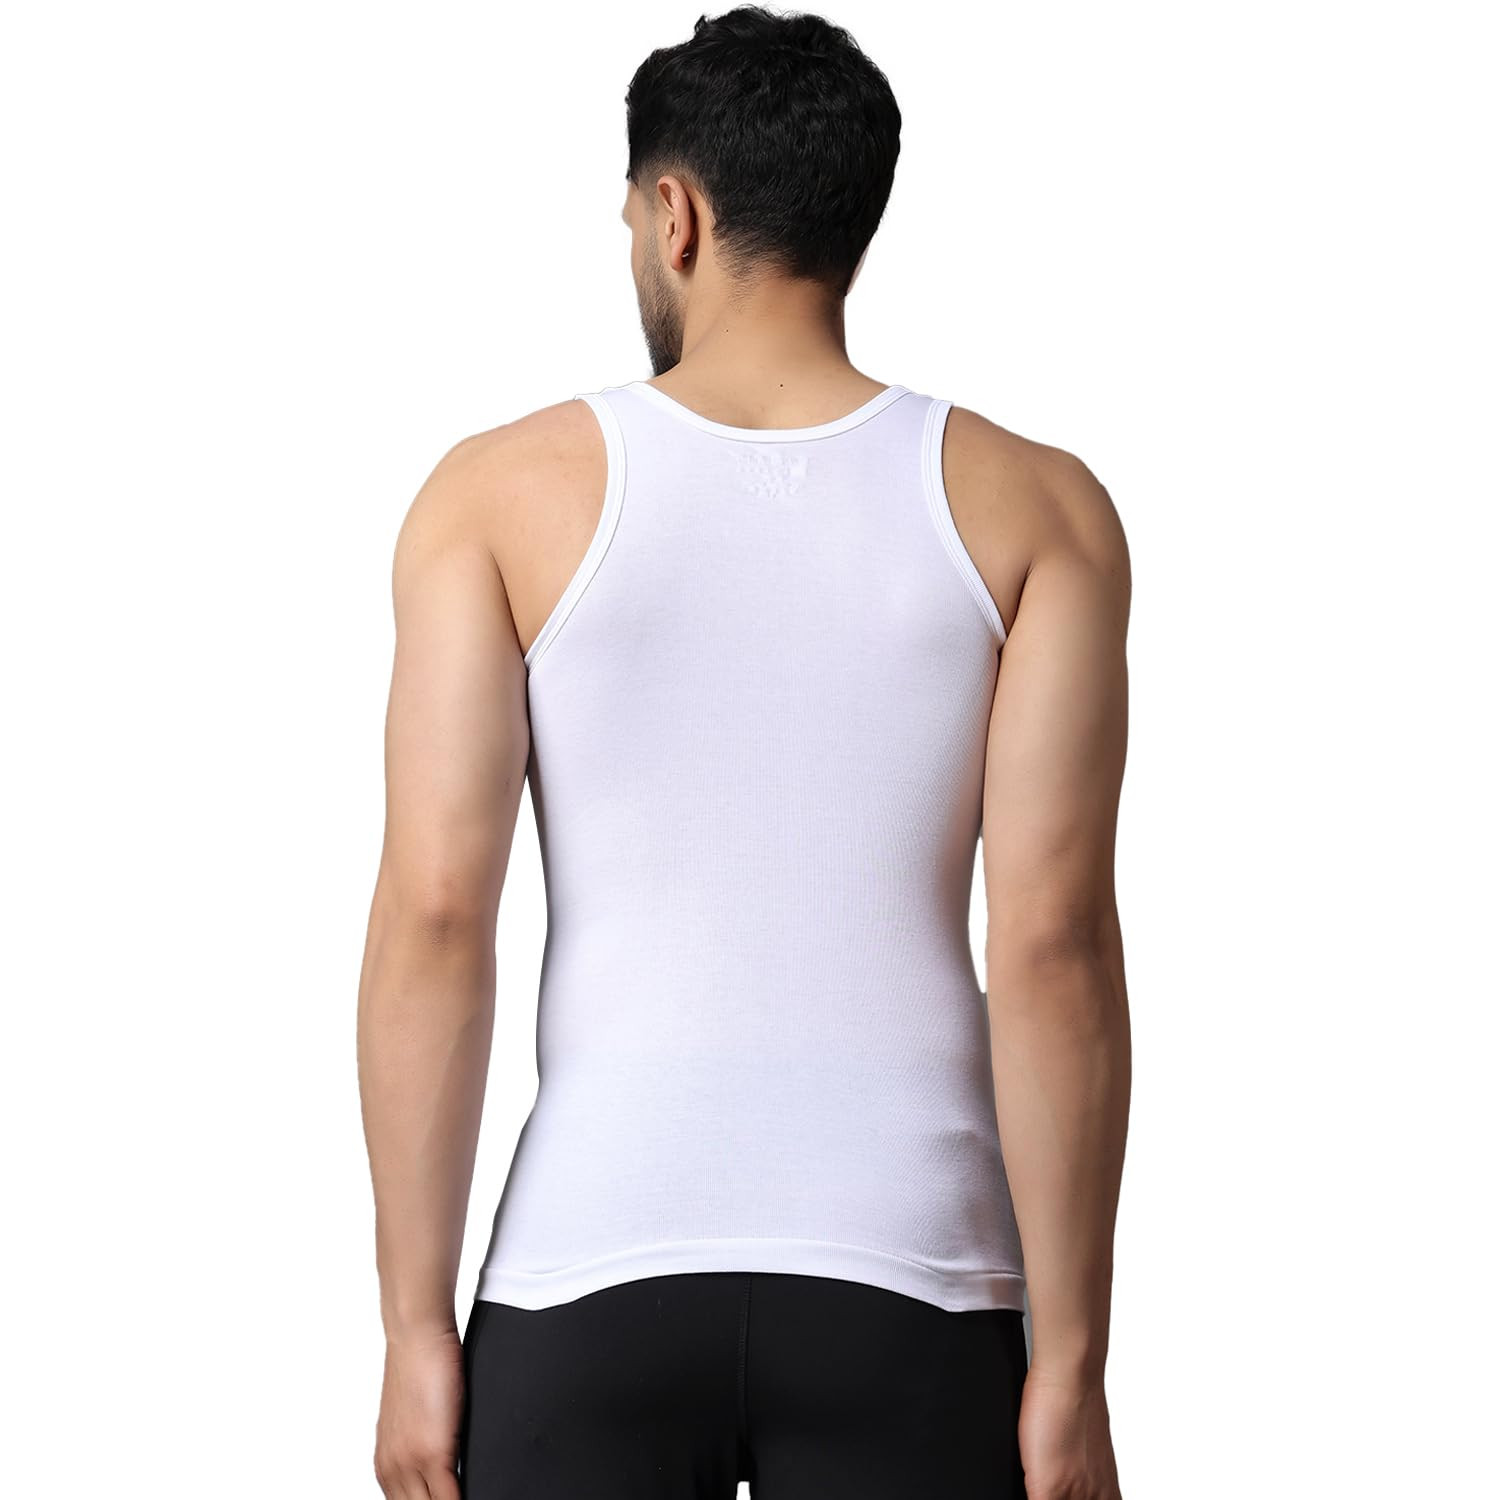 Buy Wearslim Slimming Vest for Women Premium Workout Tank Top